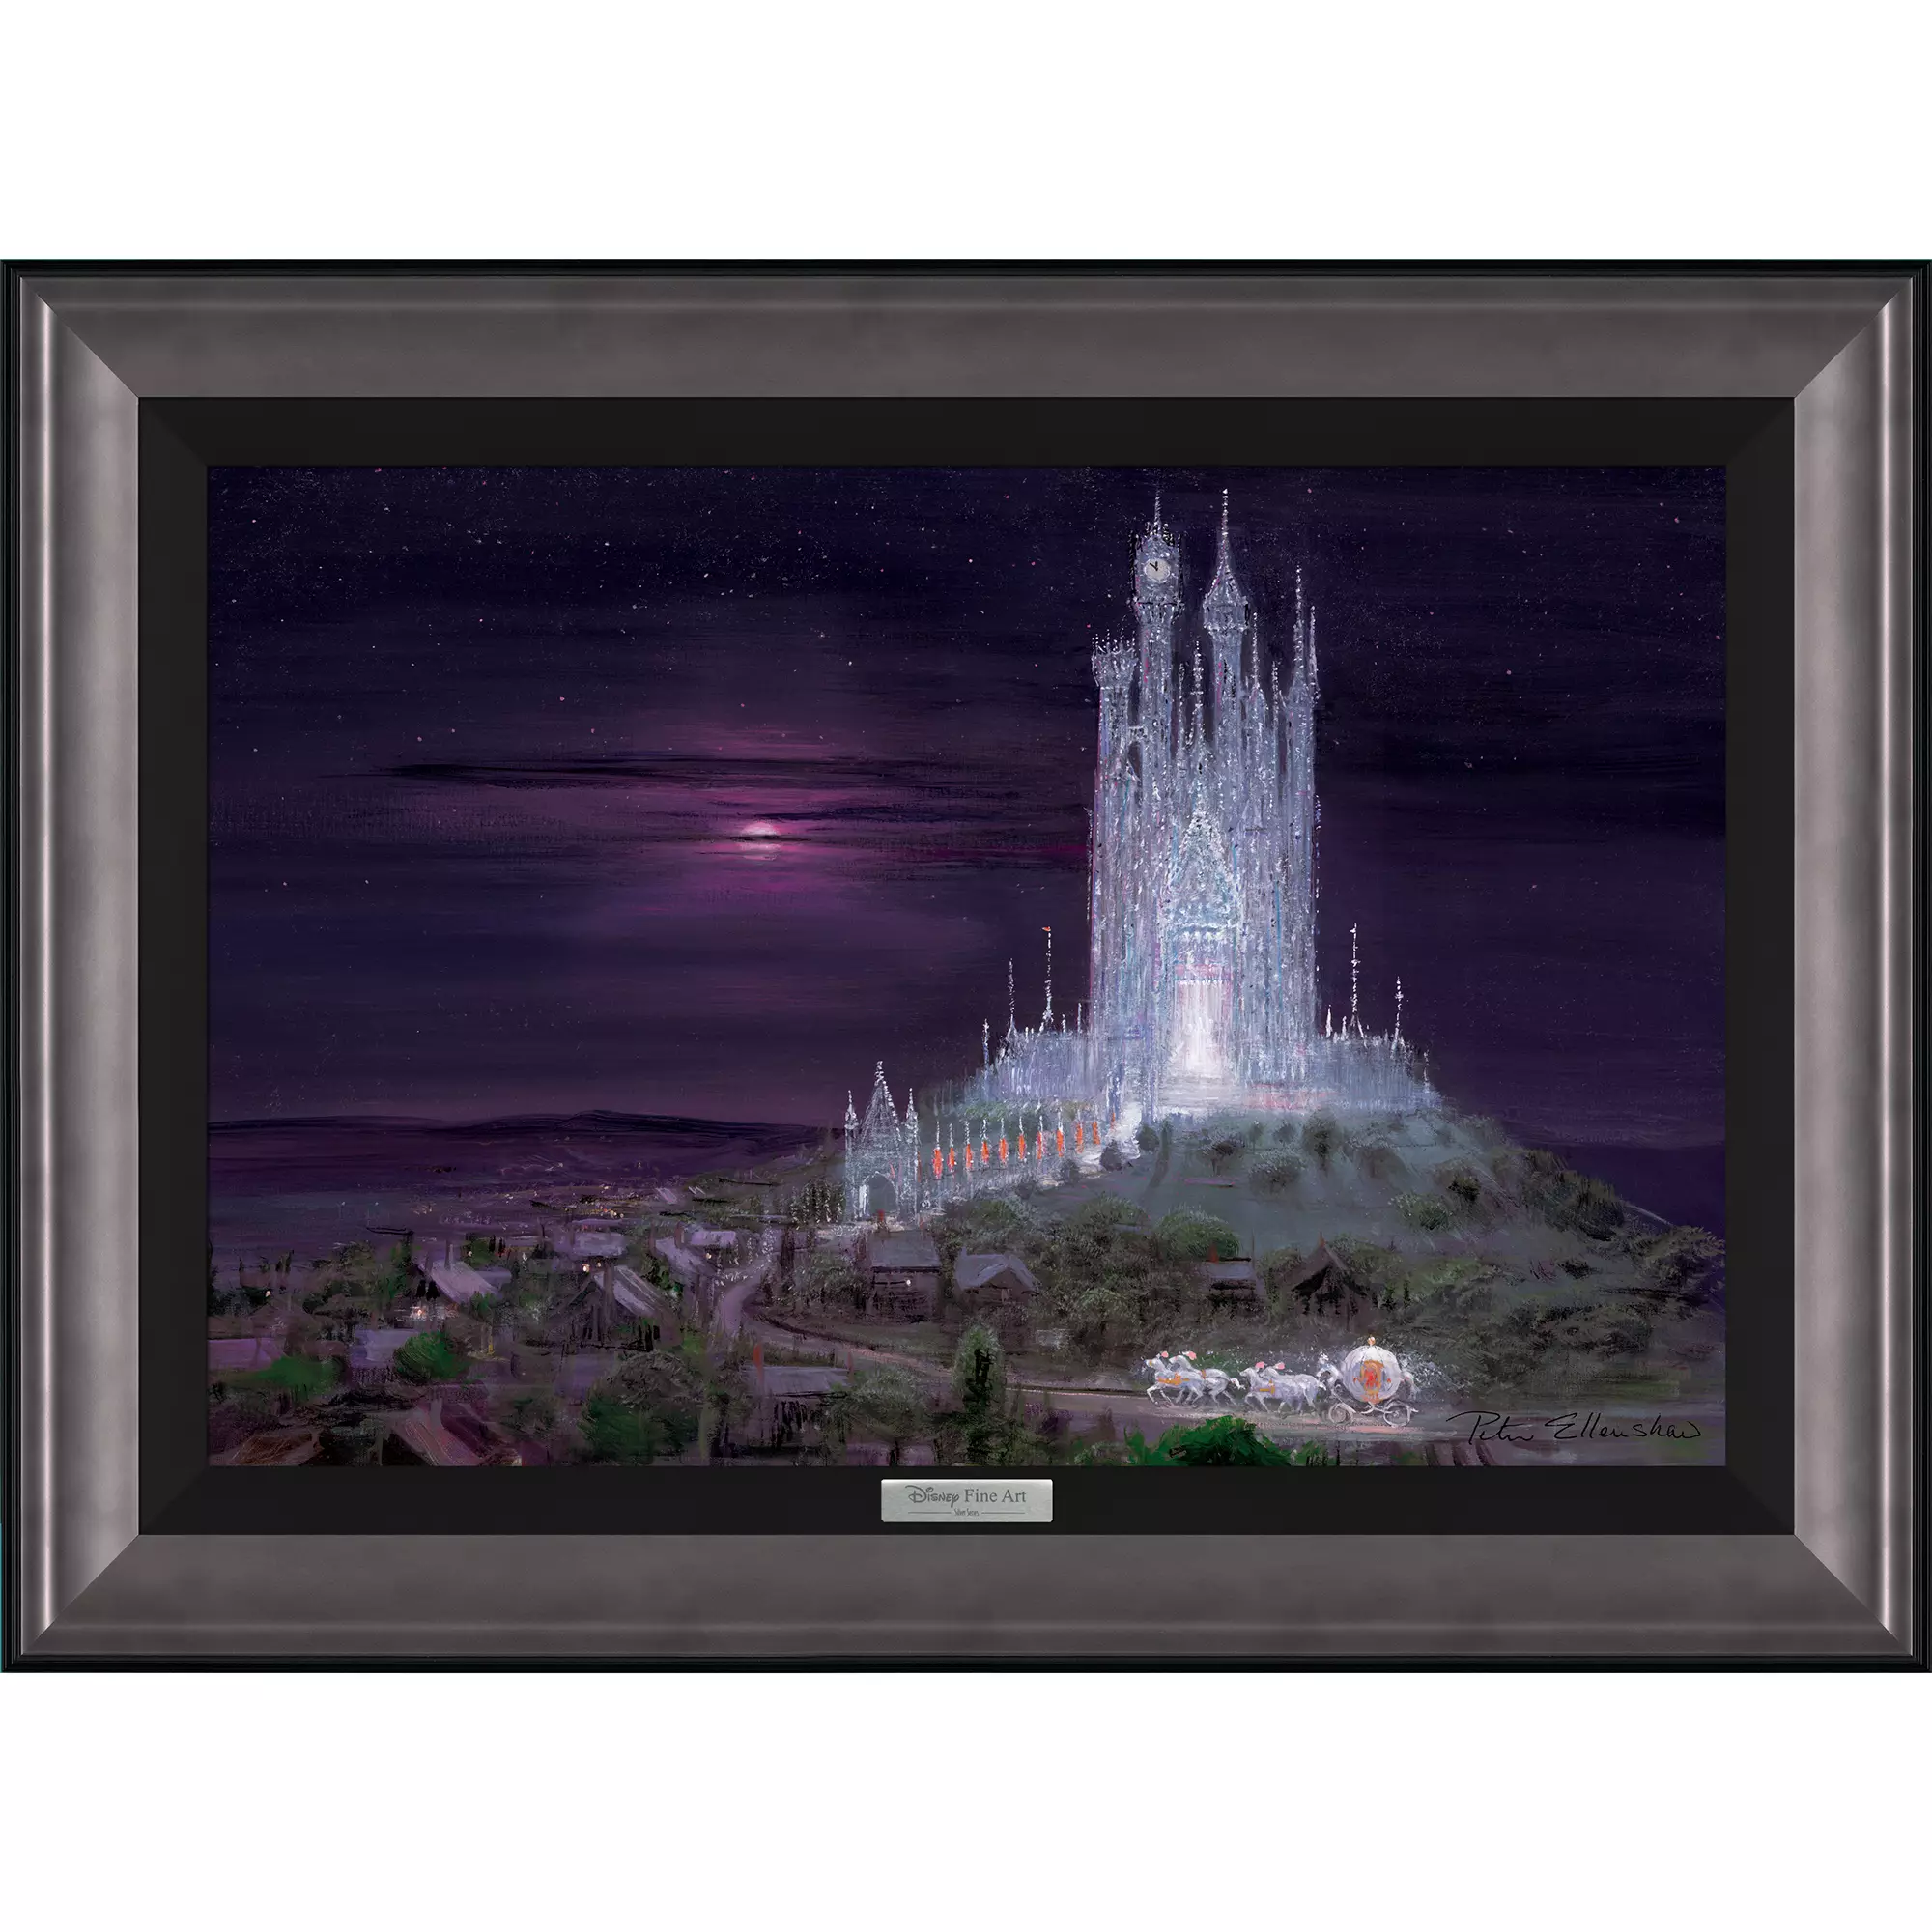 Cinderella Glass Castle by Peter Ellenshaw Framed Canvas Artwork – Limited Edition